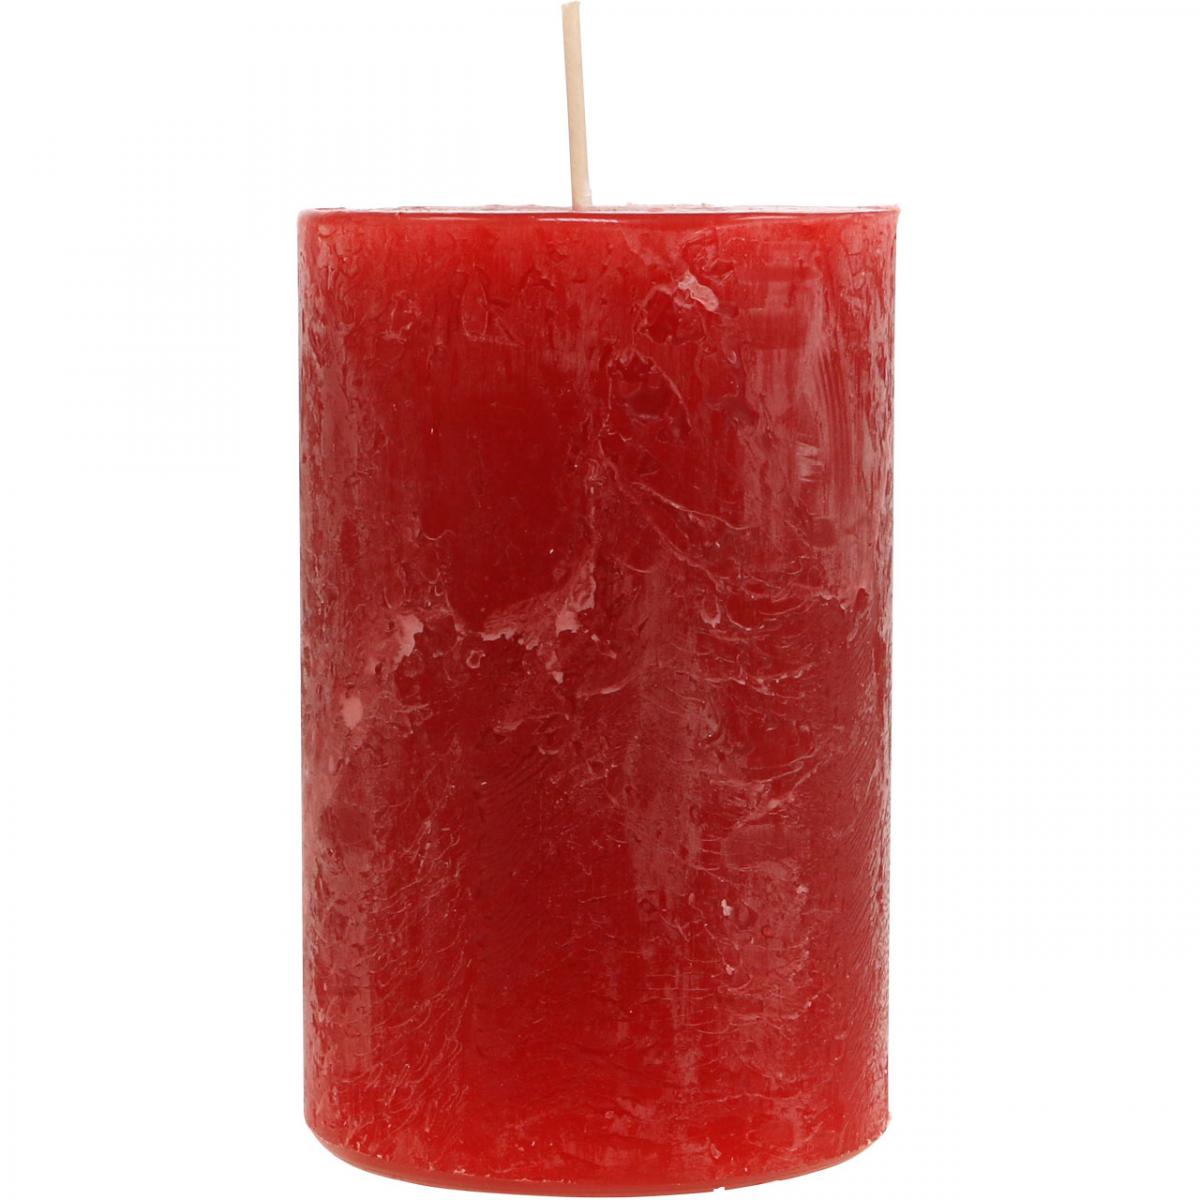 Candele a colonna rosse Candele dell'Avvento piccole candele  60/40mm 24pz-618101-001